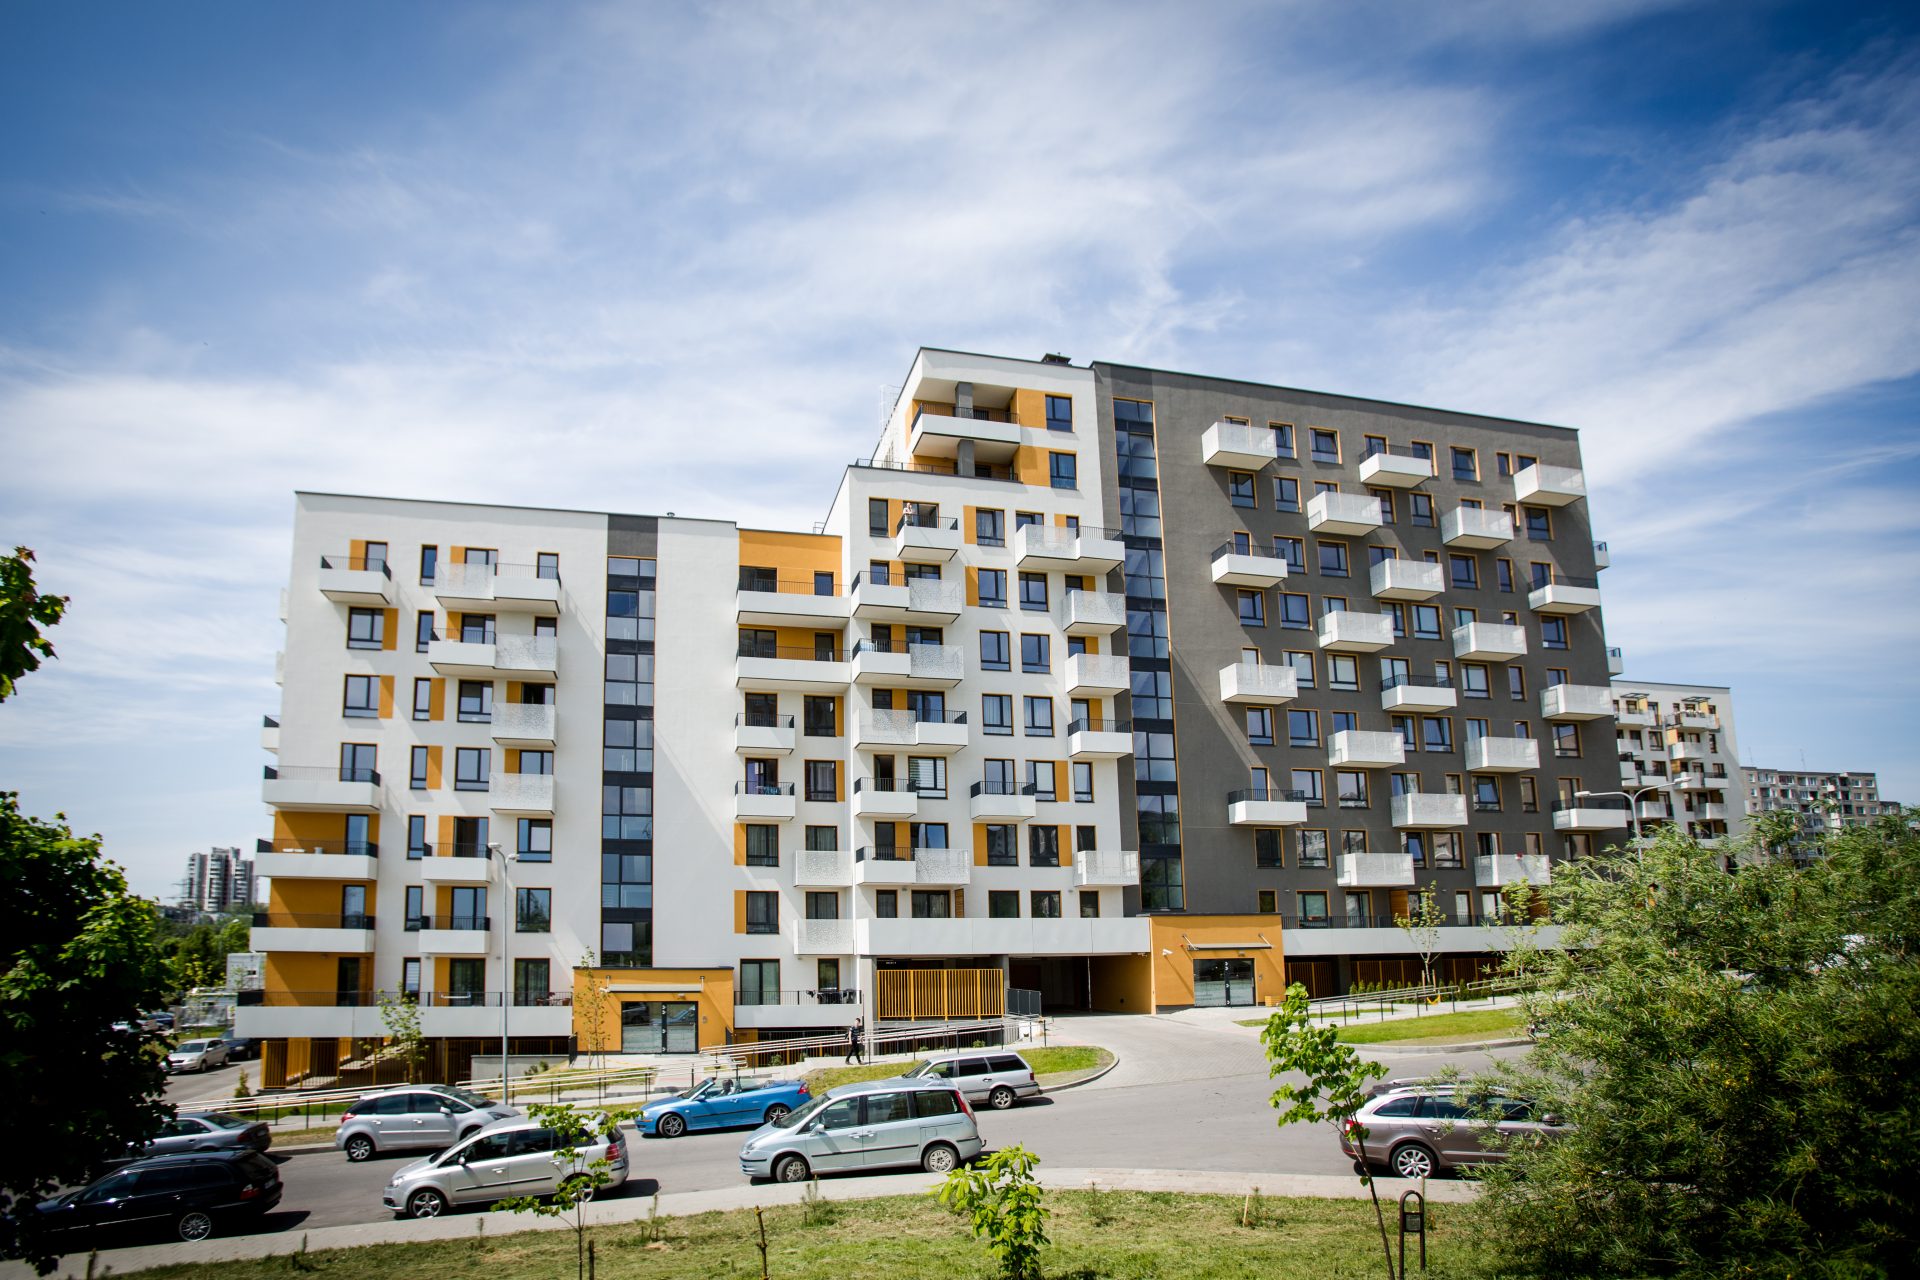 Apartment house „LightHause II“ Fabijoniškių st. 3B, Vilnius. Construction works